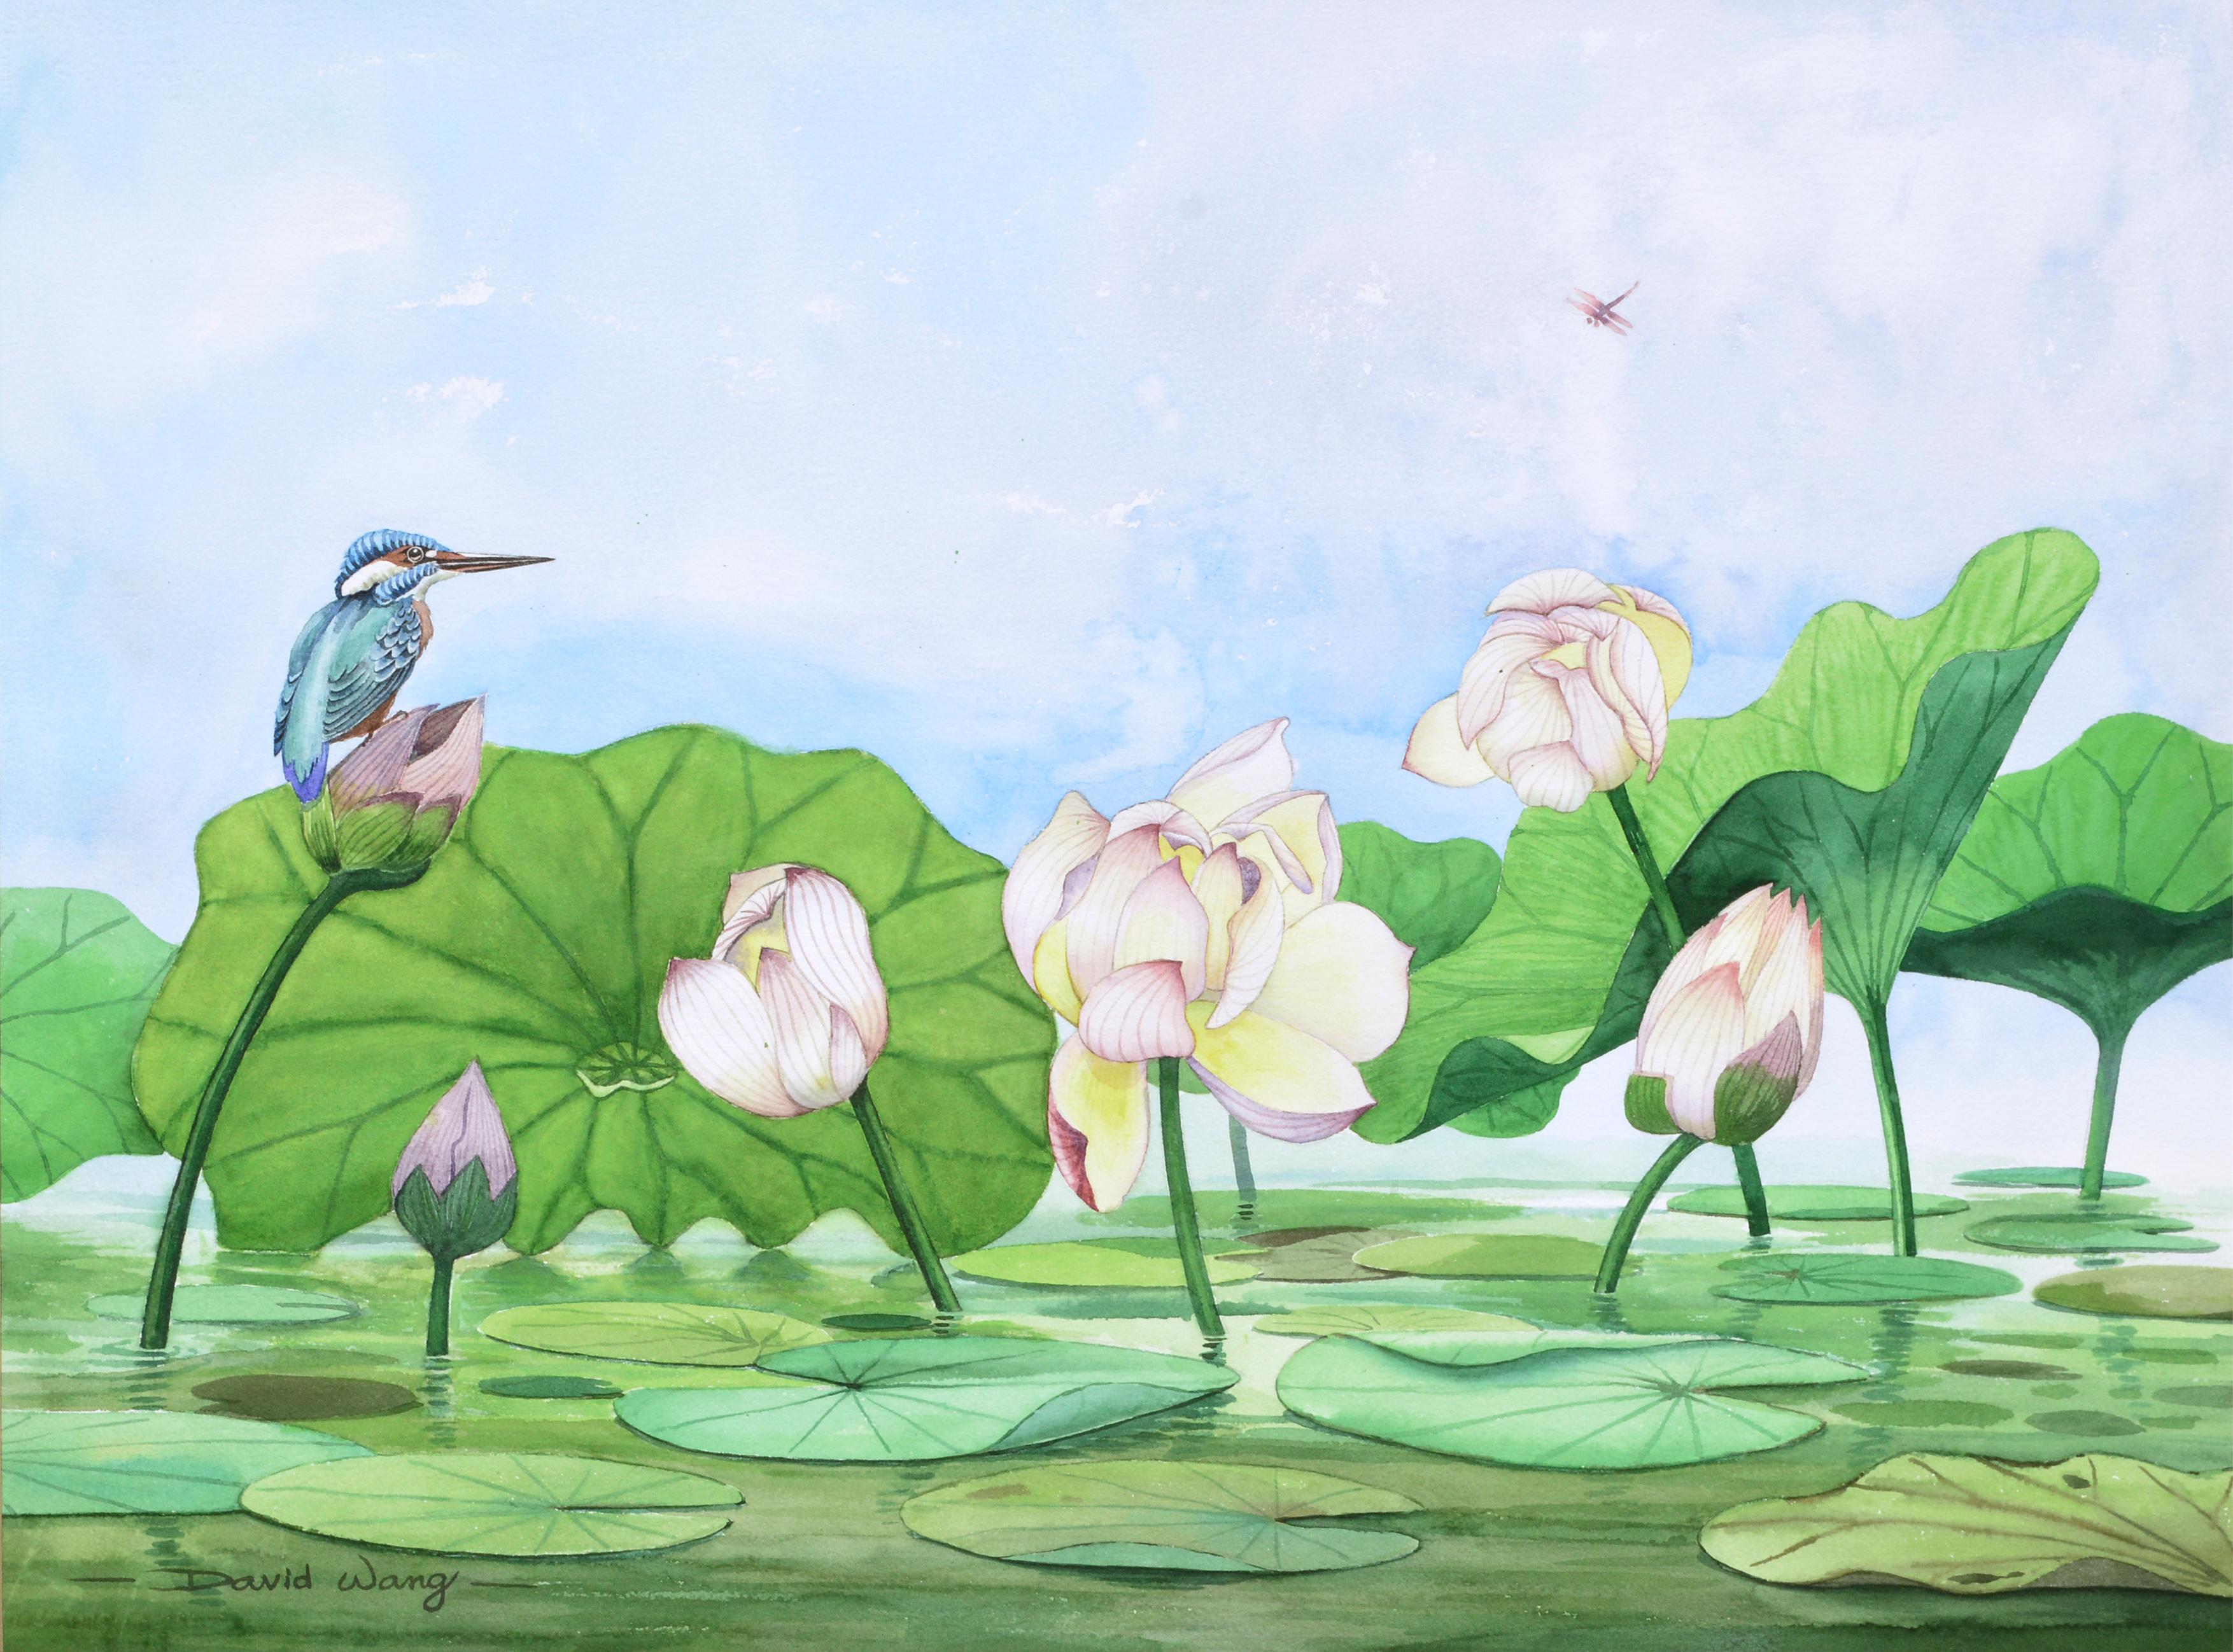 Bird Perched on Water Lilies - Art by David Wang